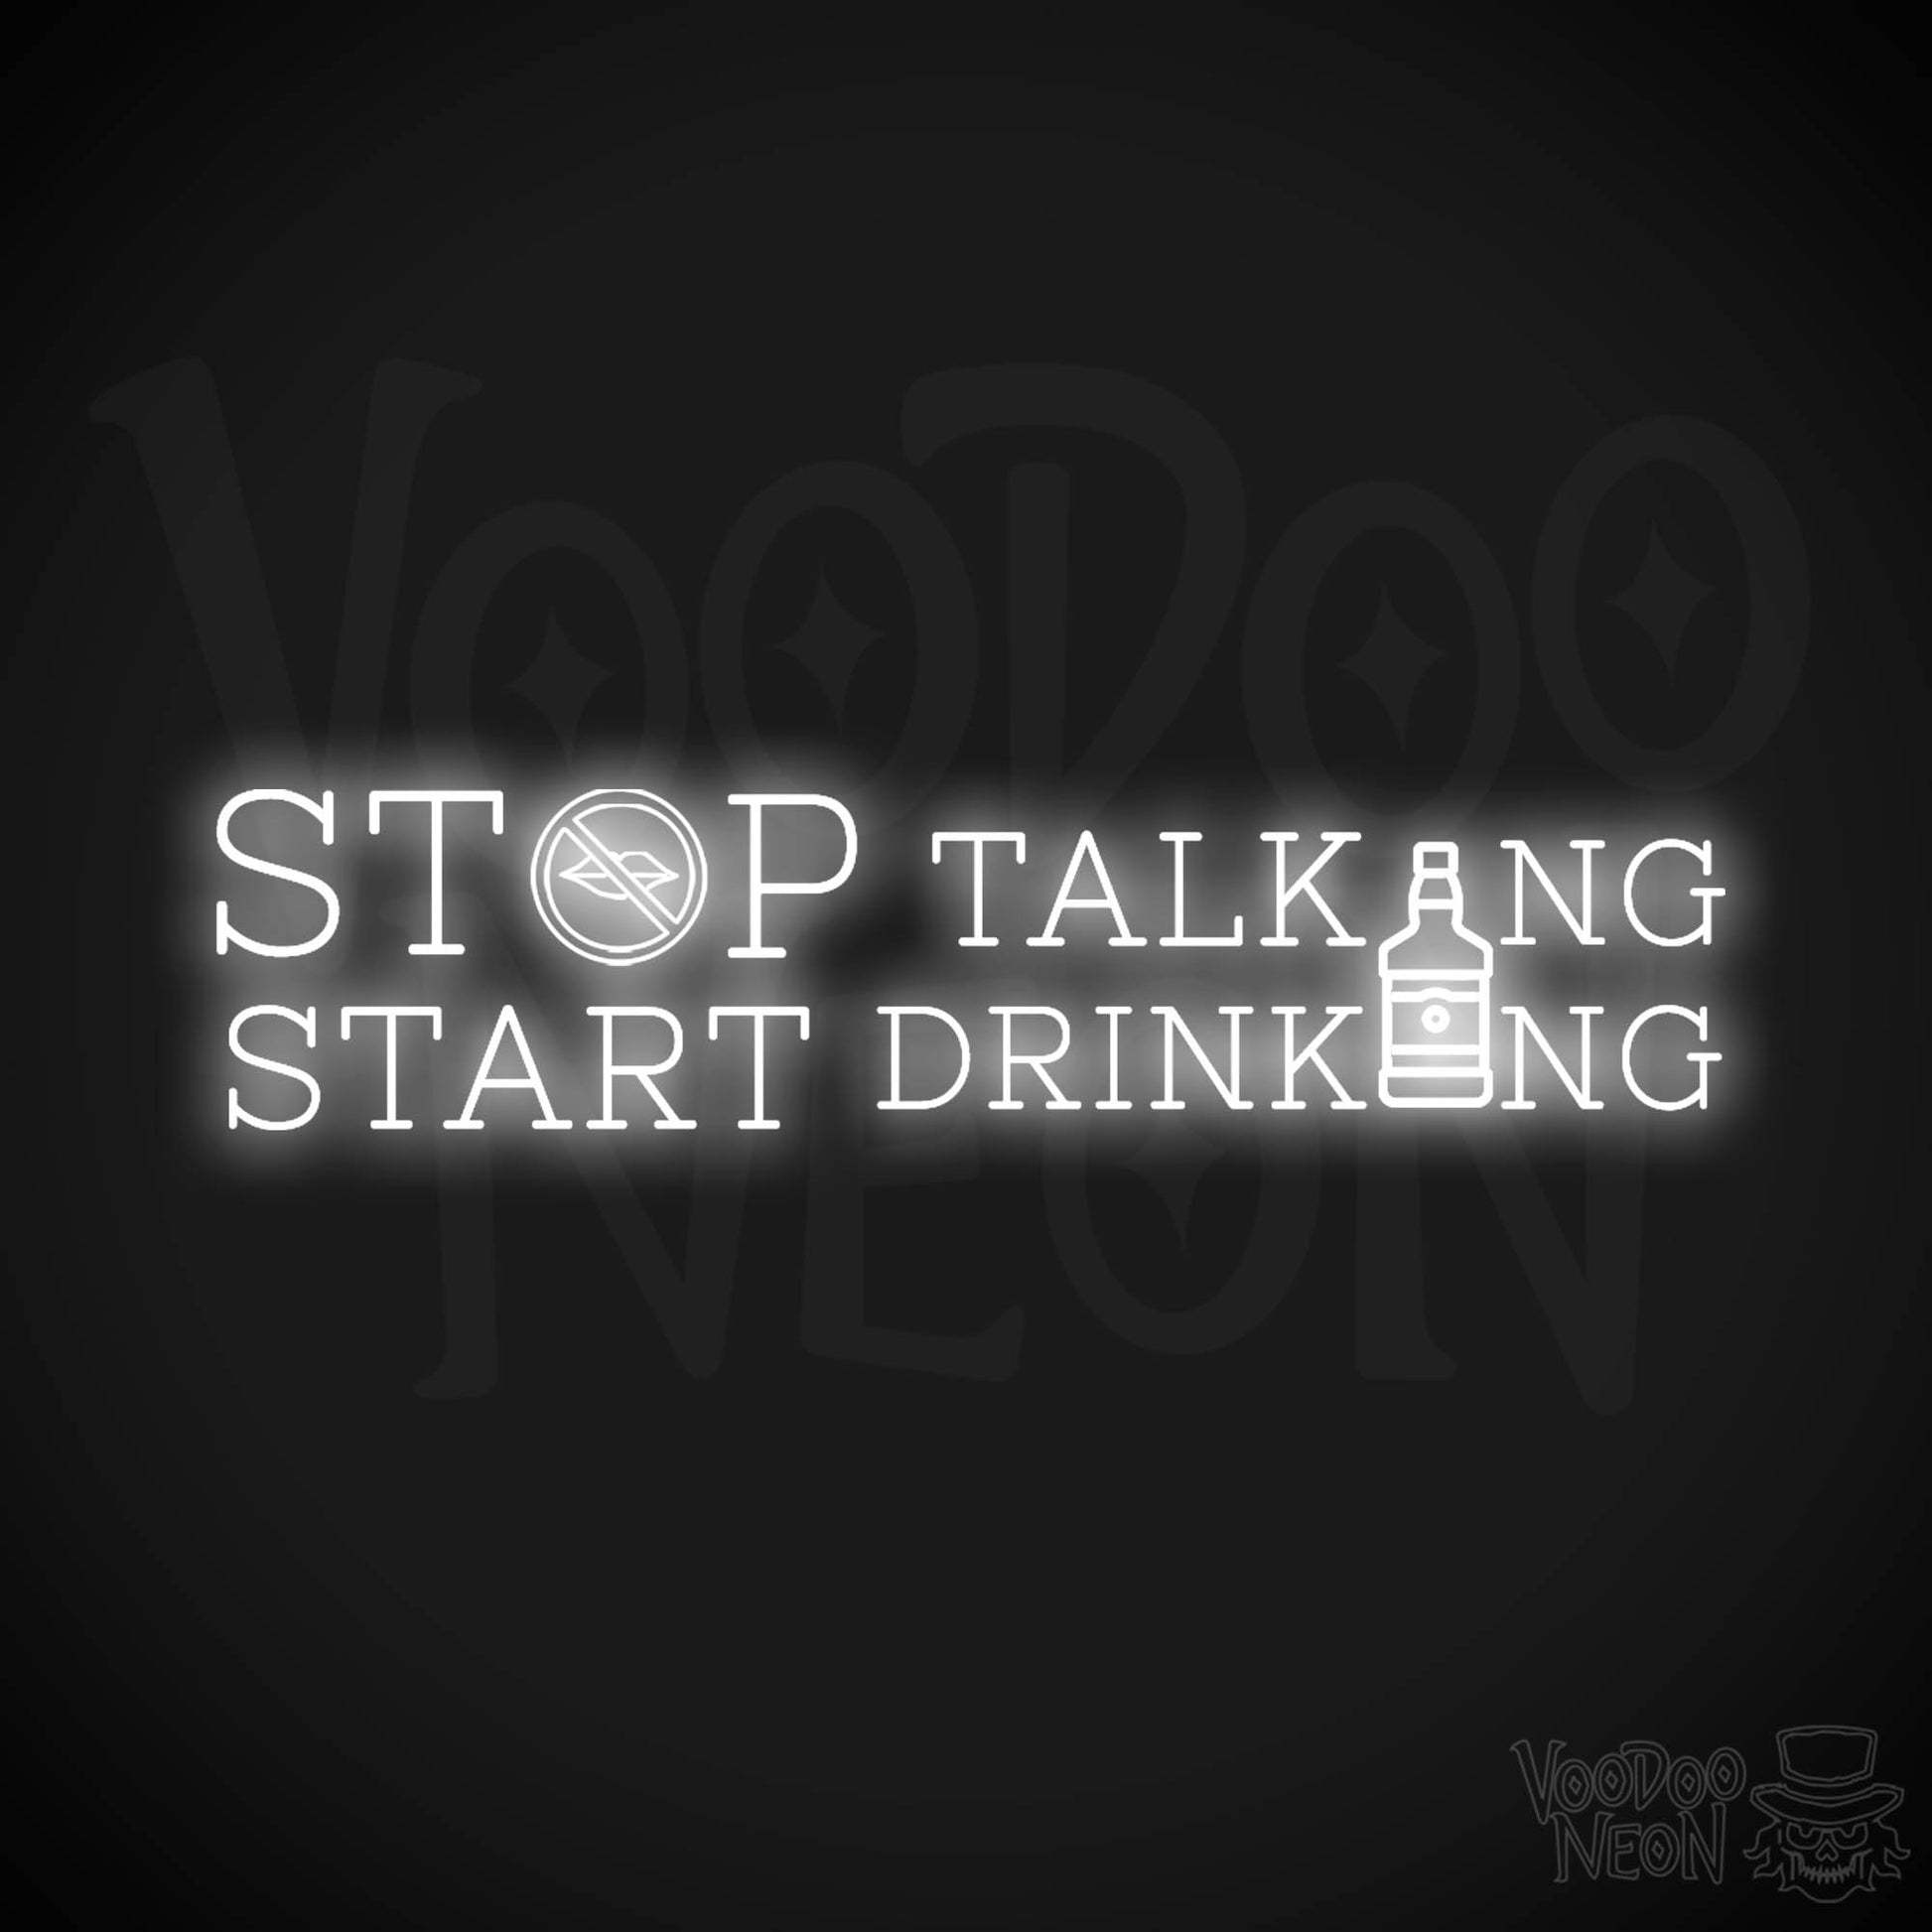 Stop Talking Start Drinking Neon Sign - Stop Talking Start Drinking Sign - Color White